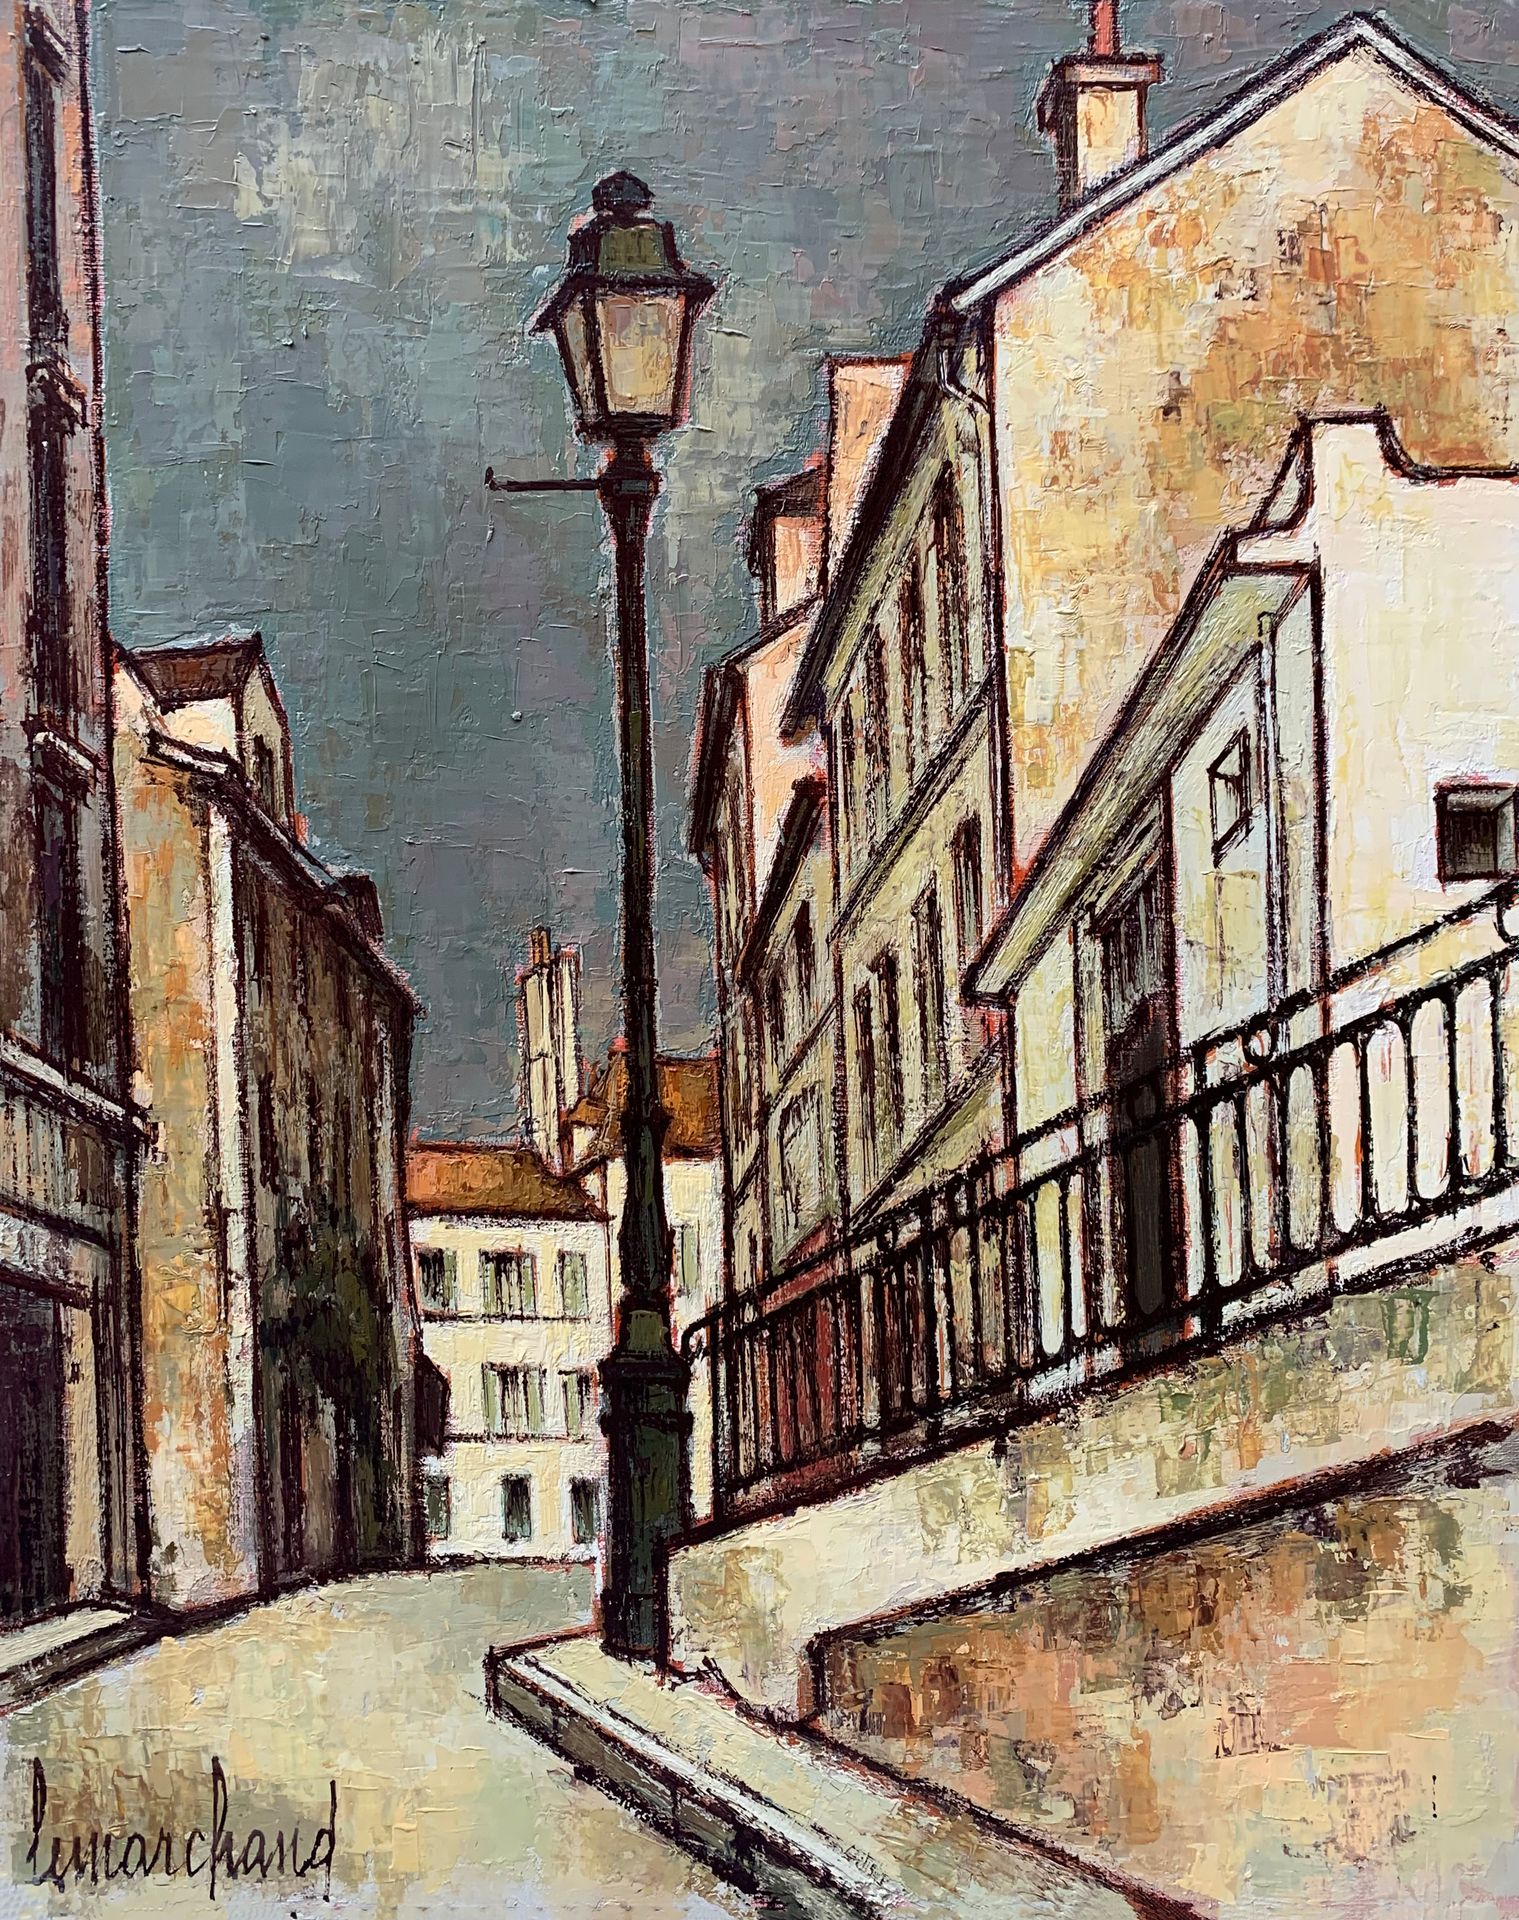 Null 皮埃尔-莱马赫德 (1906-1970)

蒙马特火车街

布面油画，左下角有签名，背面画框上有标题

61 x 50厘米。